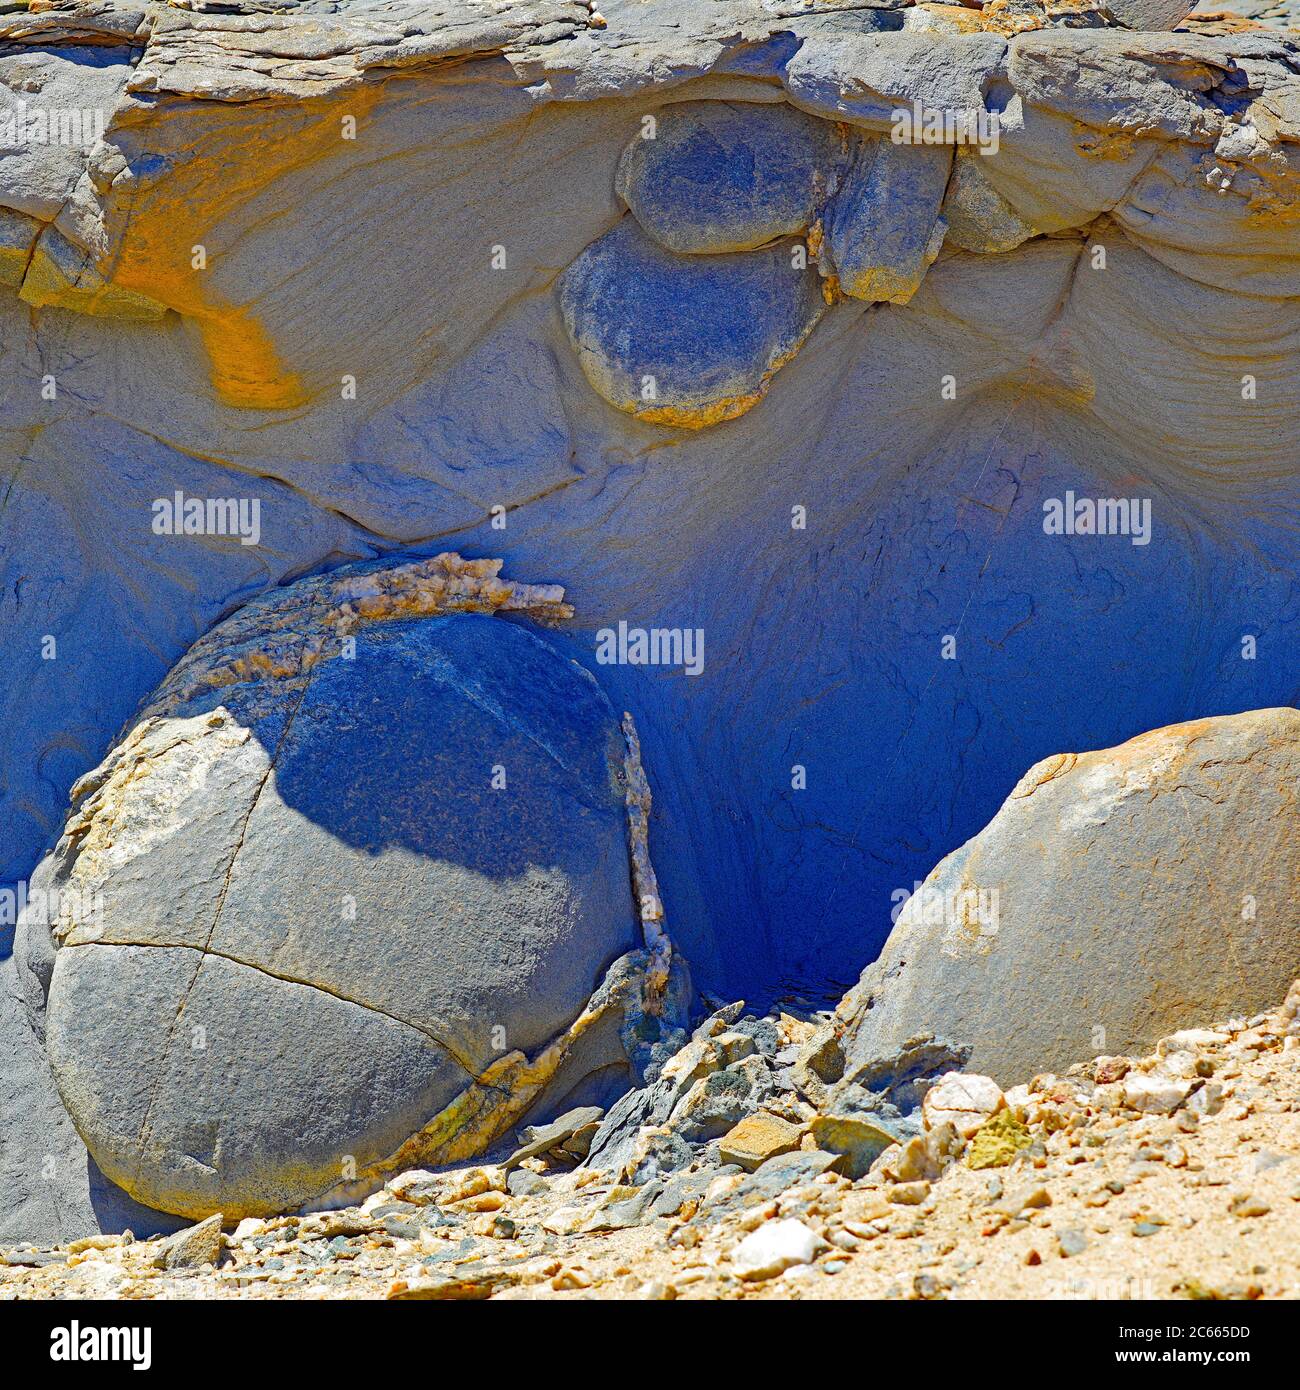 rocks, steep banks, sediments, rock balls, Namibia, Africa Stock Photo